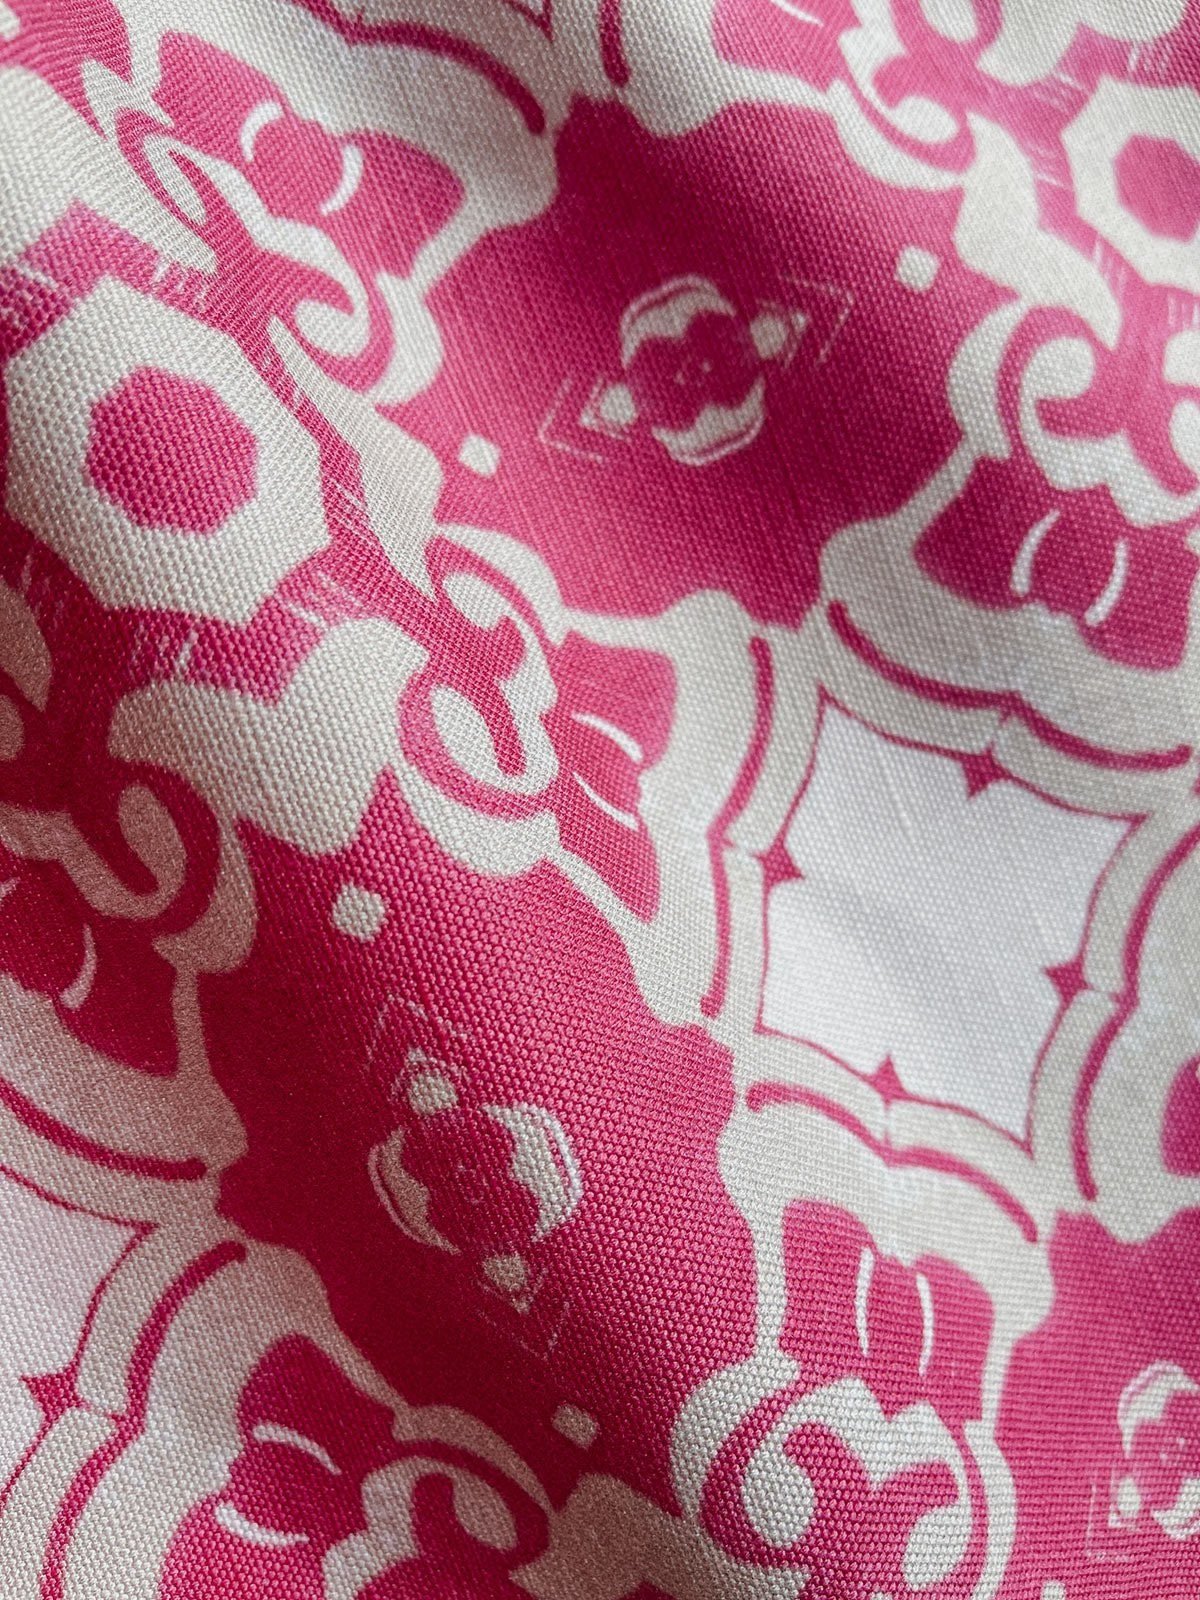 Alexandria-Pearl-and-Maude-berry-pink-Spanish-Medallion-fabric-detail-e1621555207399.jpg